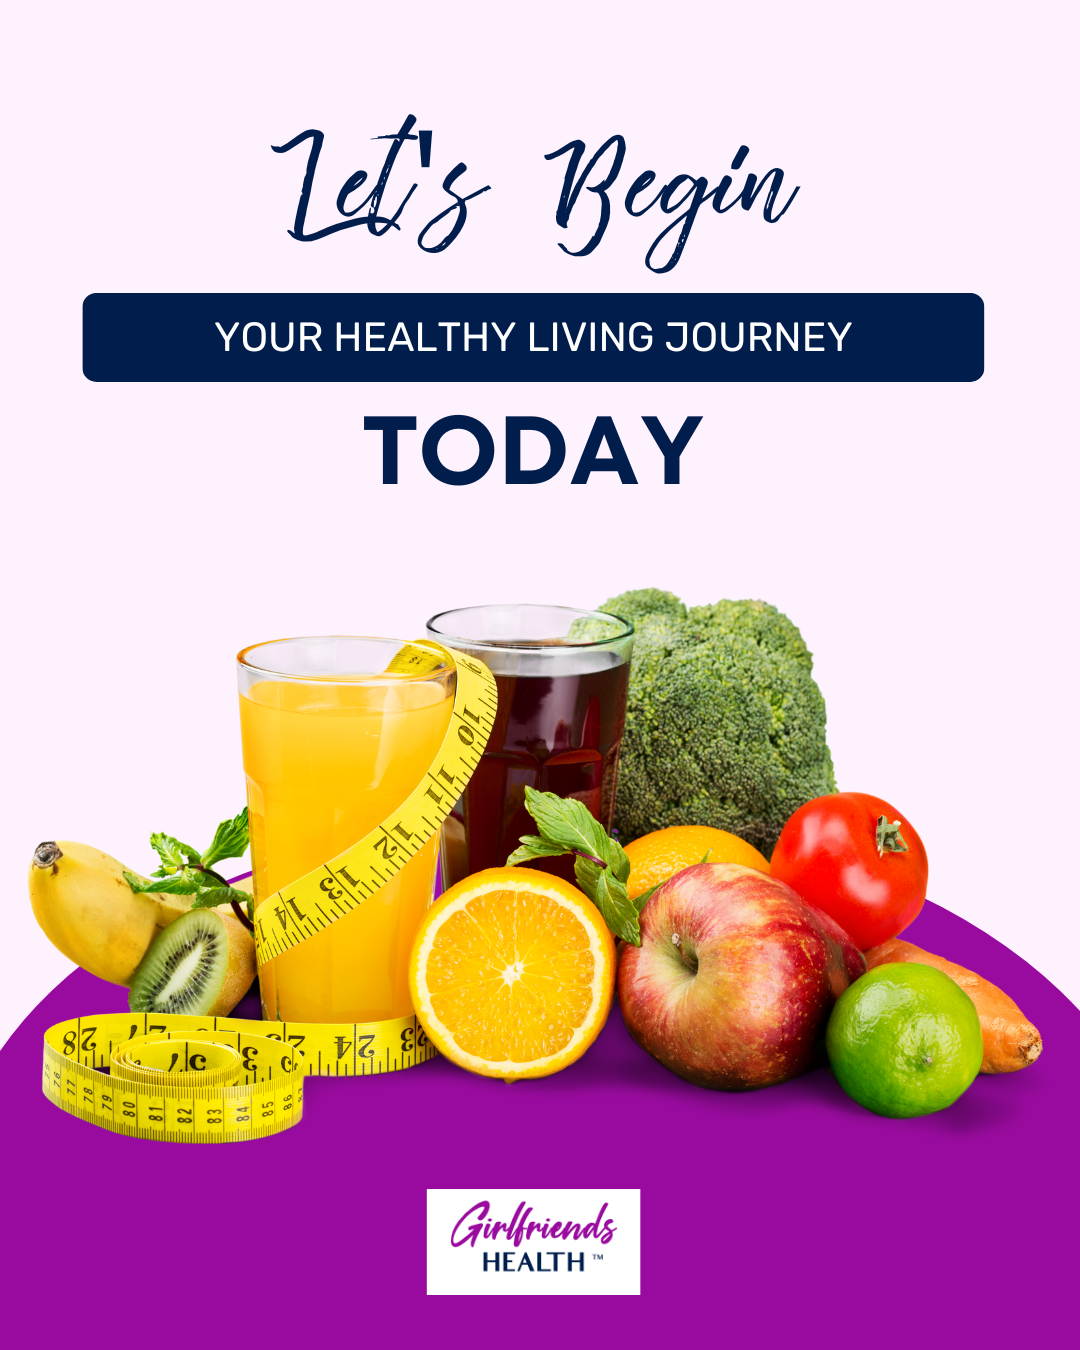 Let's Begin Your Healthy Living Journey